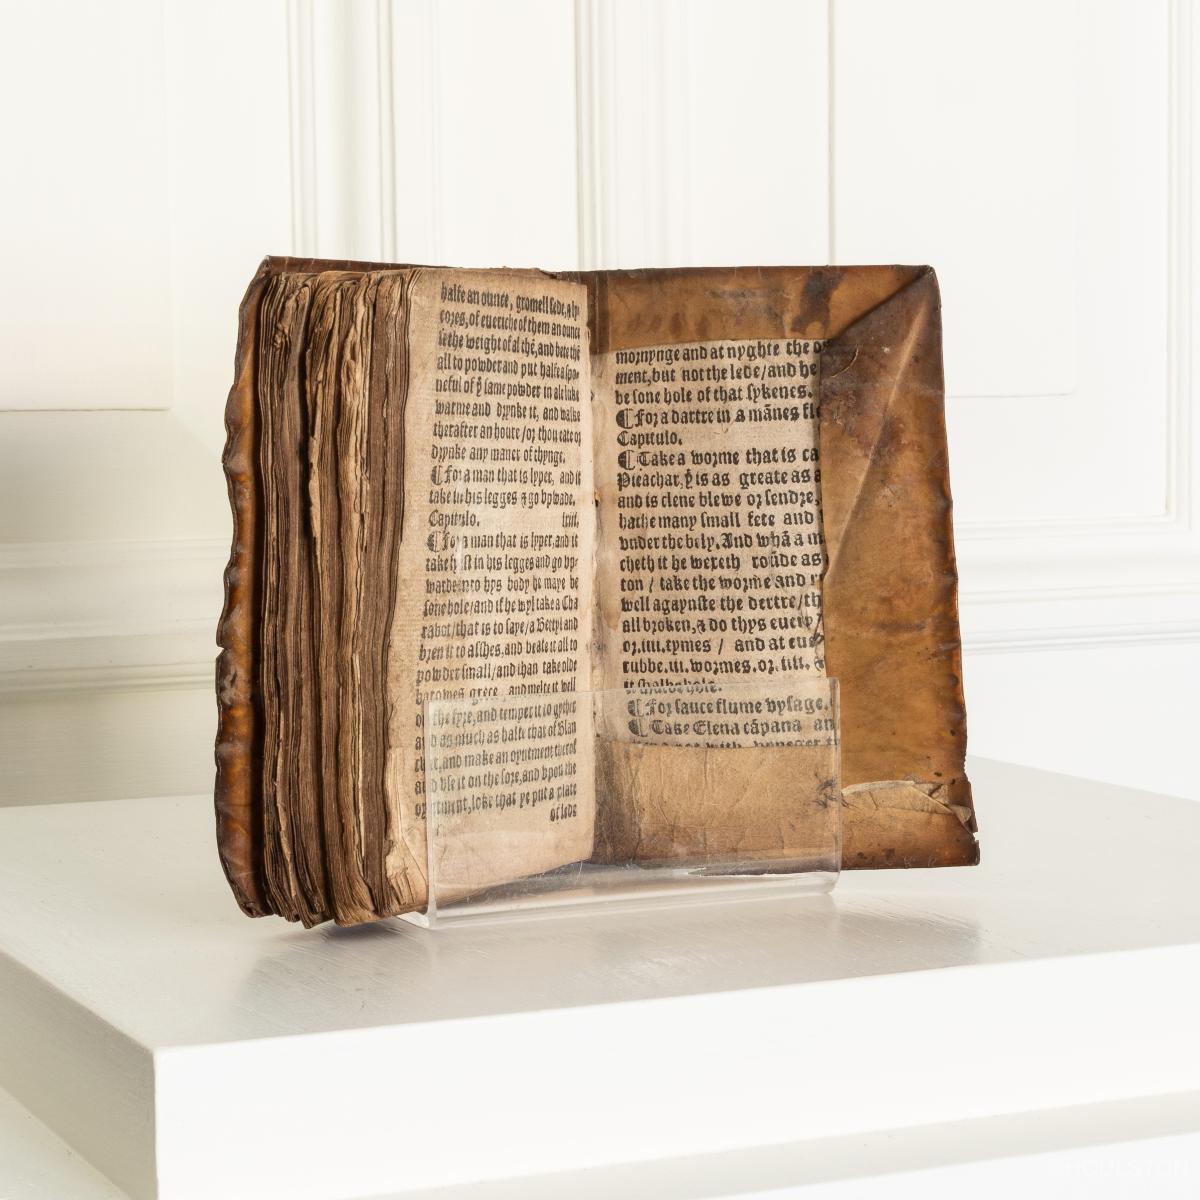 A 16th century vellum bound book of herbal remedies